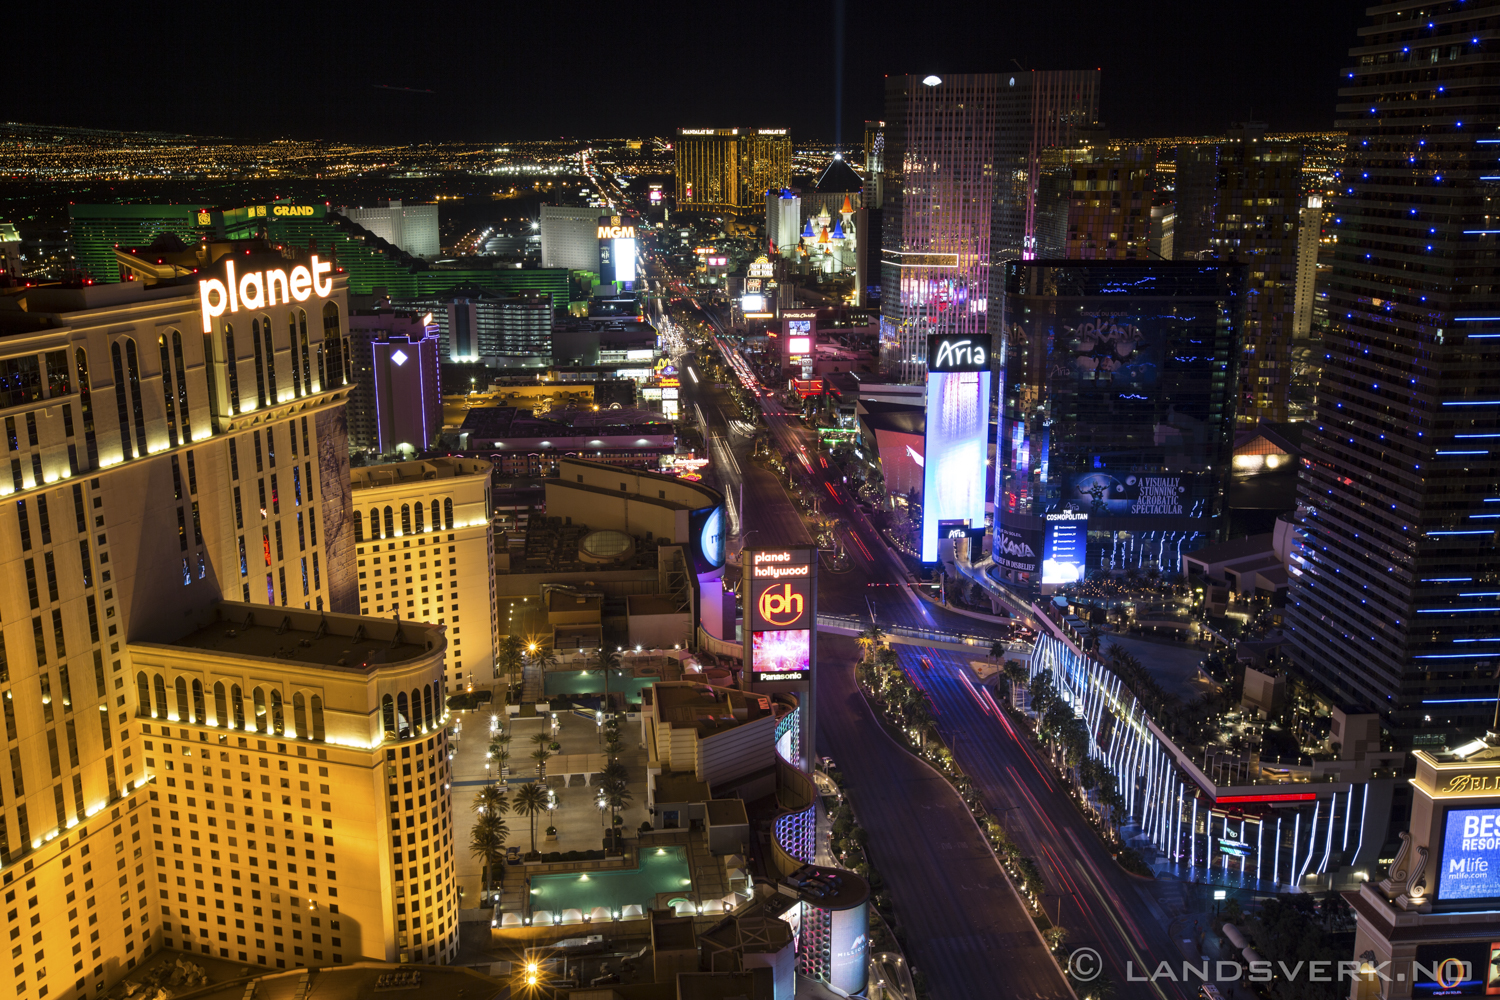 Las Vegas, Nevada. 

(Canon EOS 5D Mark III / Canon EF 16-35mm f/2.8 L II USM)